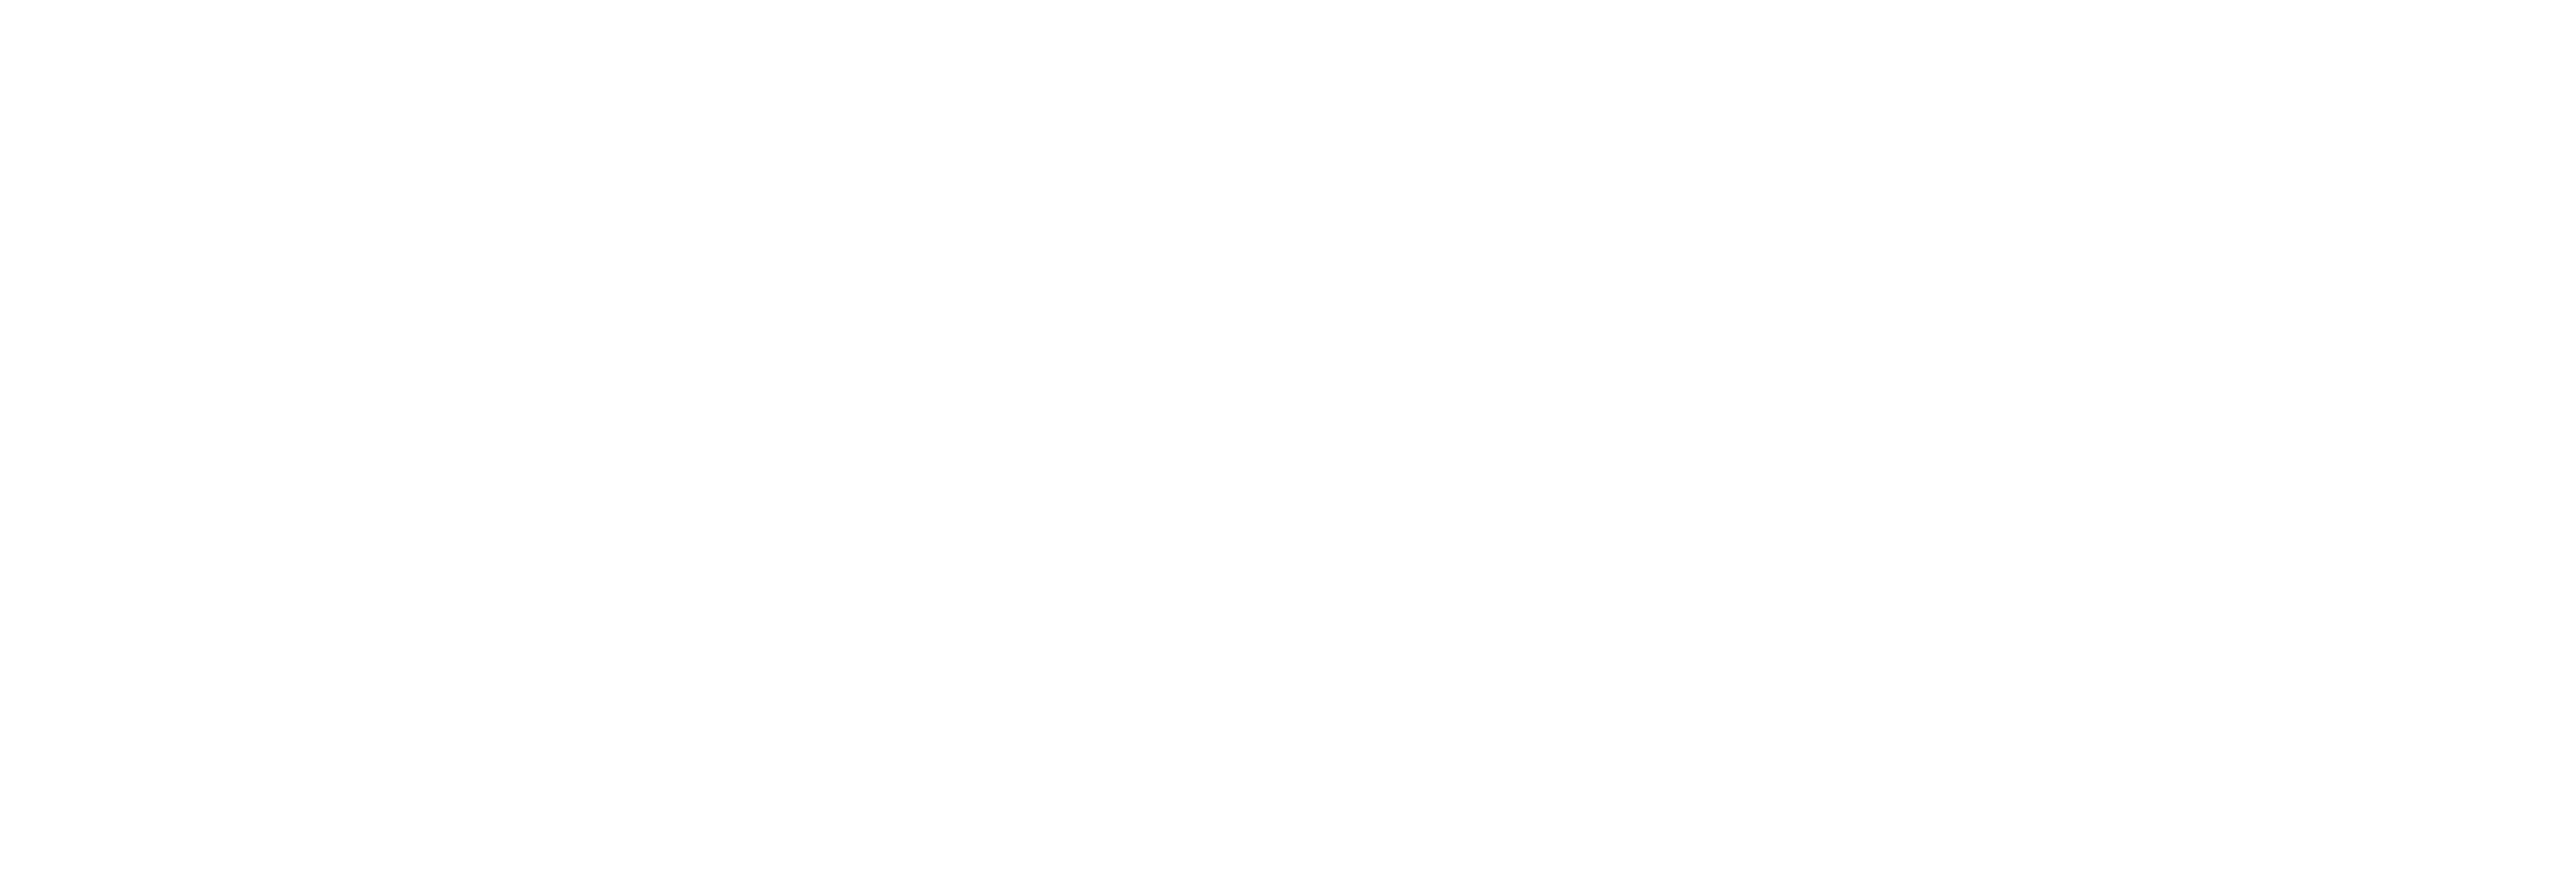 AniCura Hjørring Dyrehospital logo